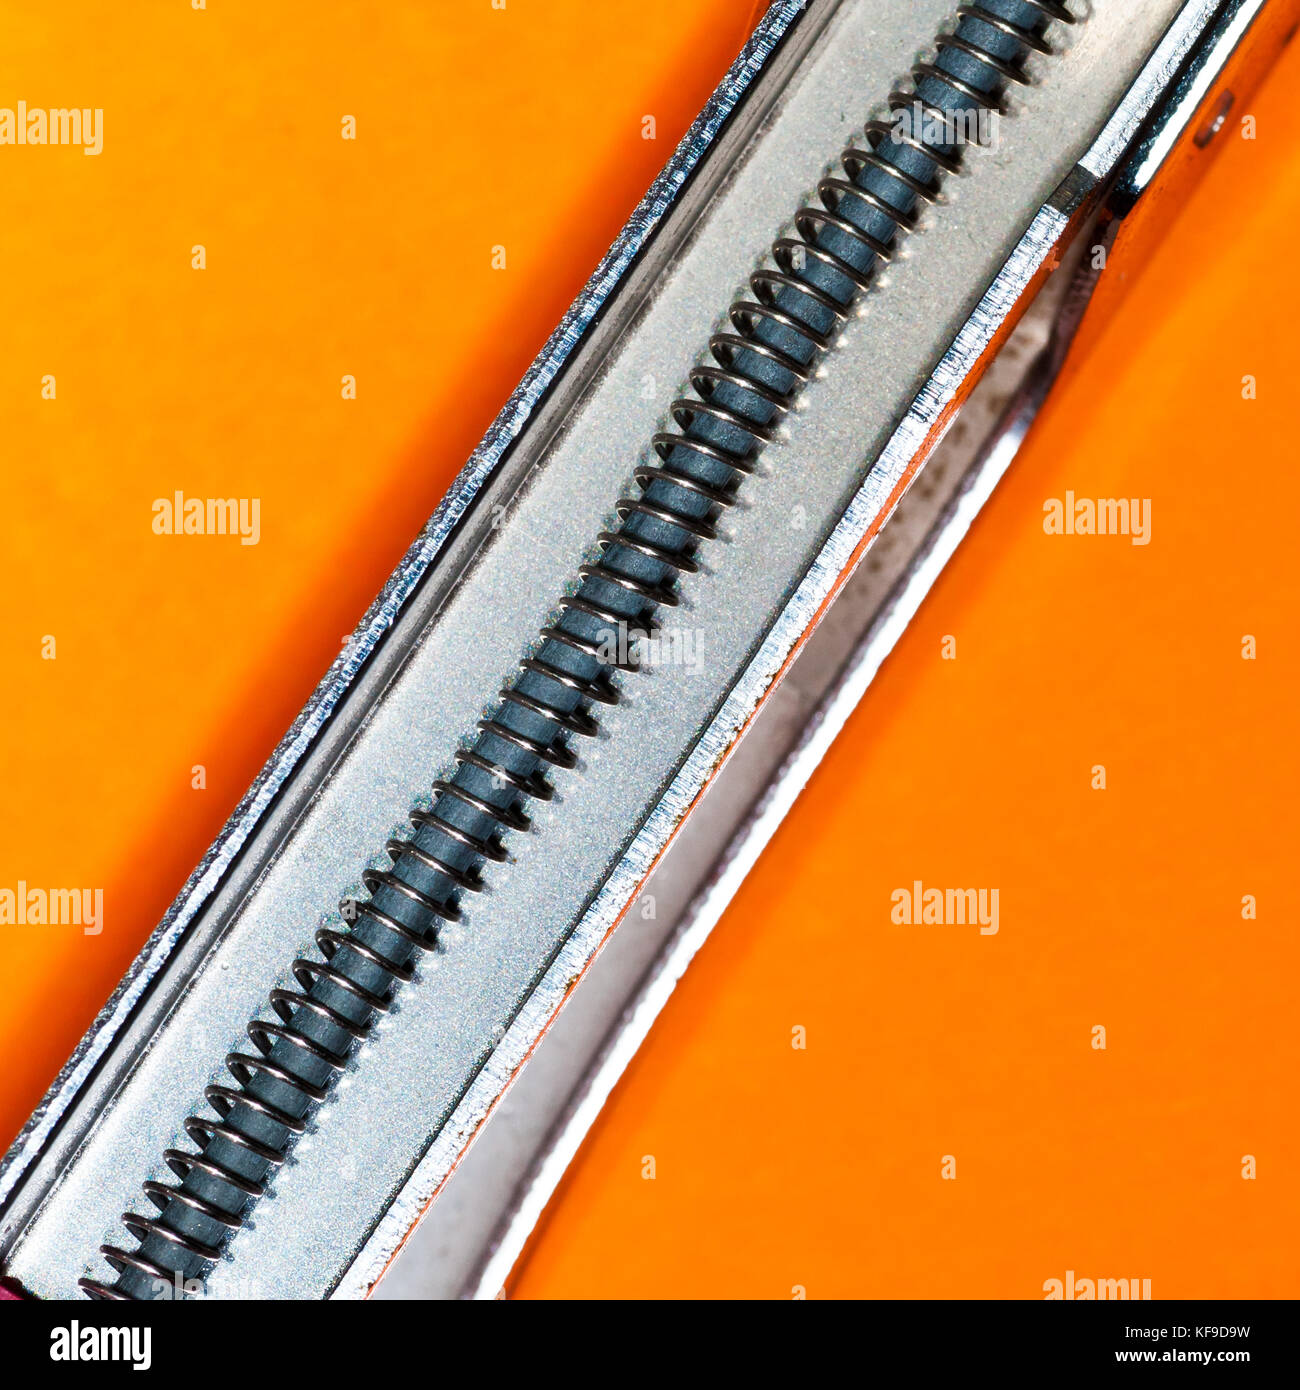 A macro shot of the spring inside a stapler. Stock Photo